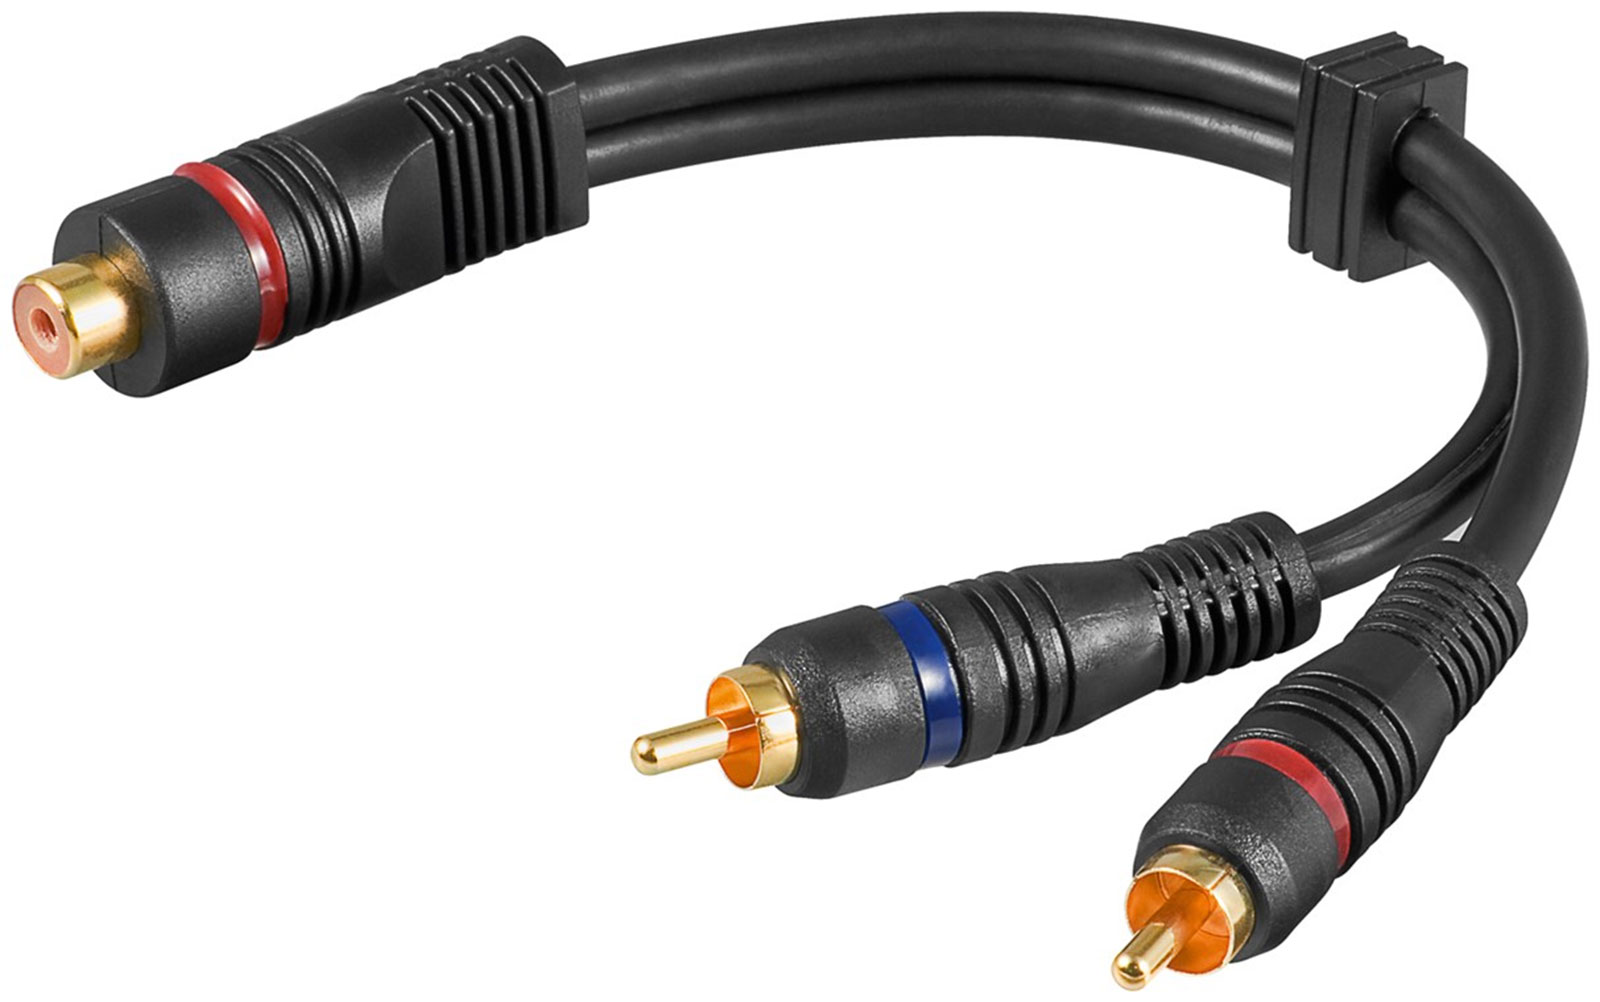 Cinch Verbinder Stereo Cinchkupplung vergoldet Cinchkabel verbinden #6895 